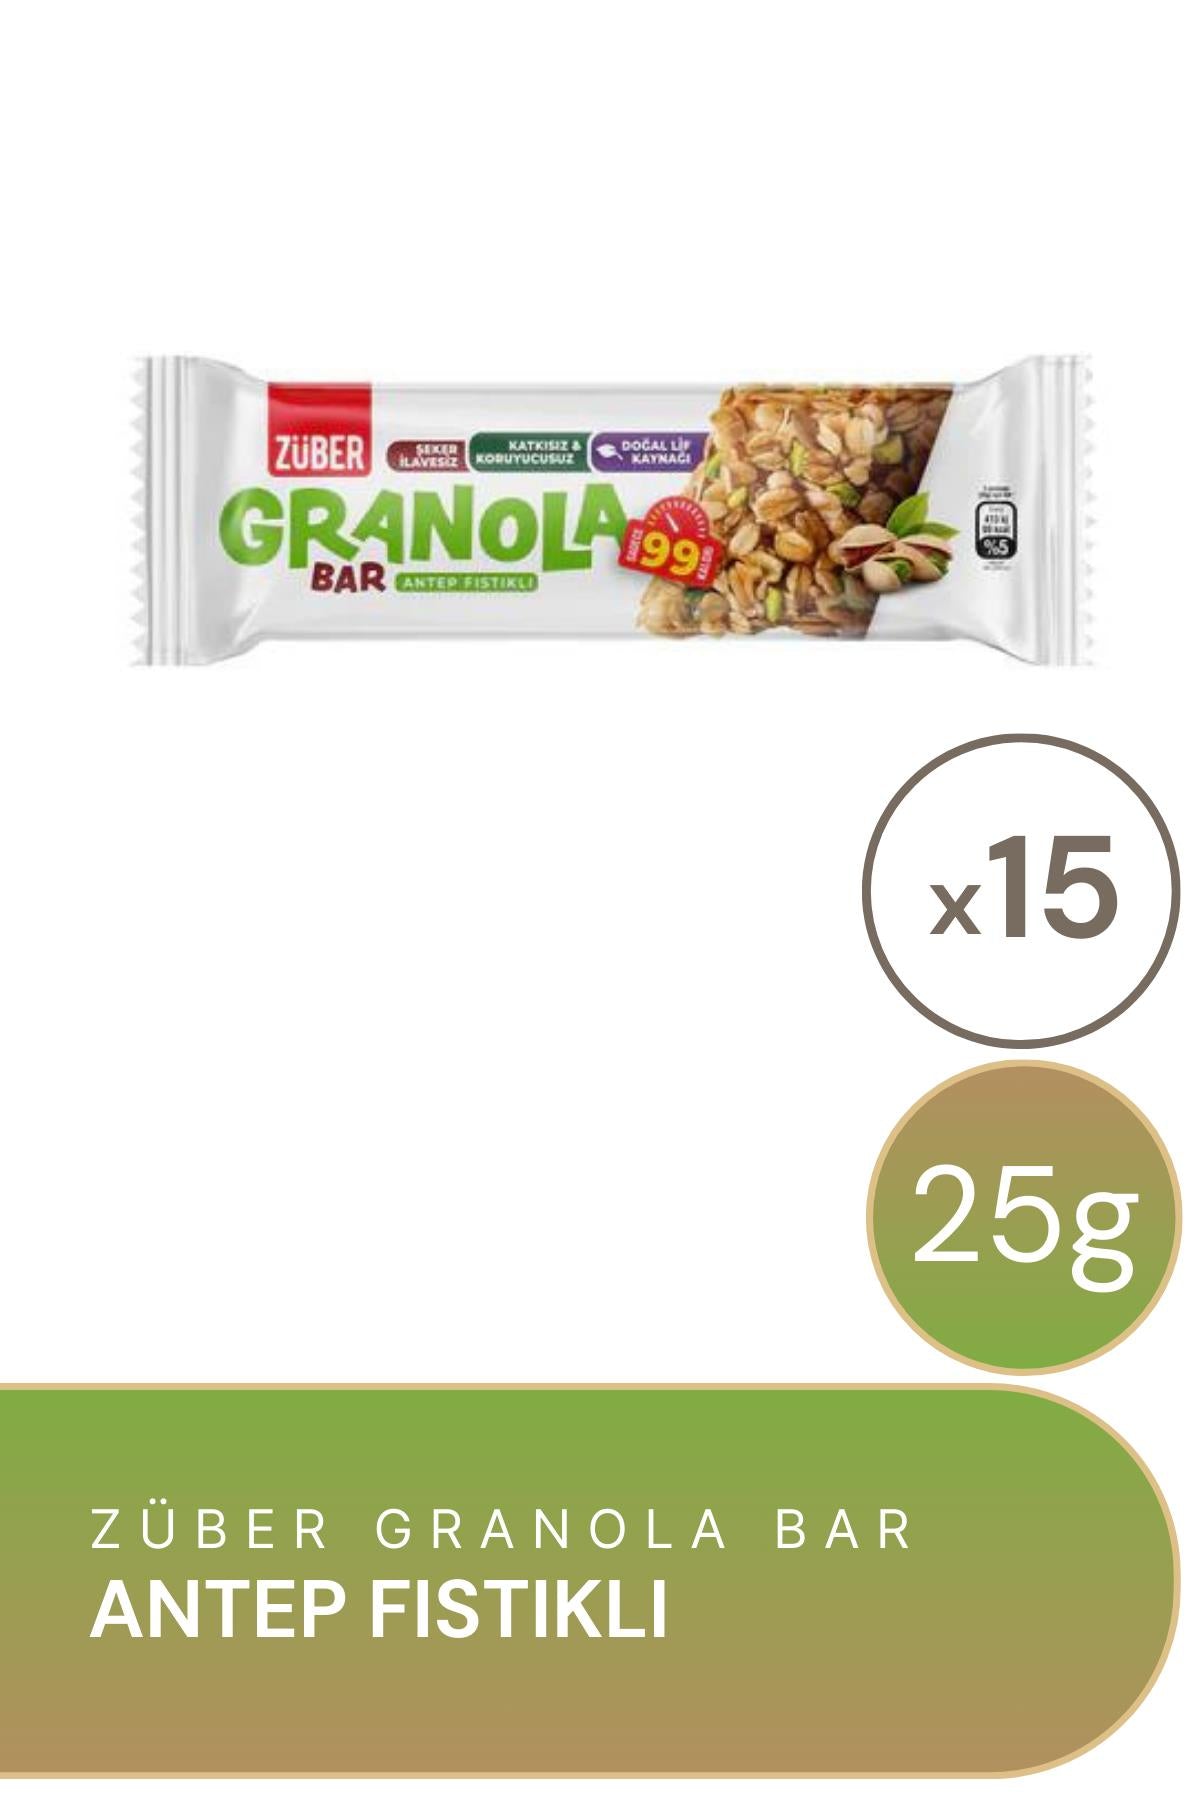 Züber Antep Fıstıklı Granola Bar 25 g 15'li Paket